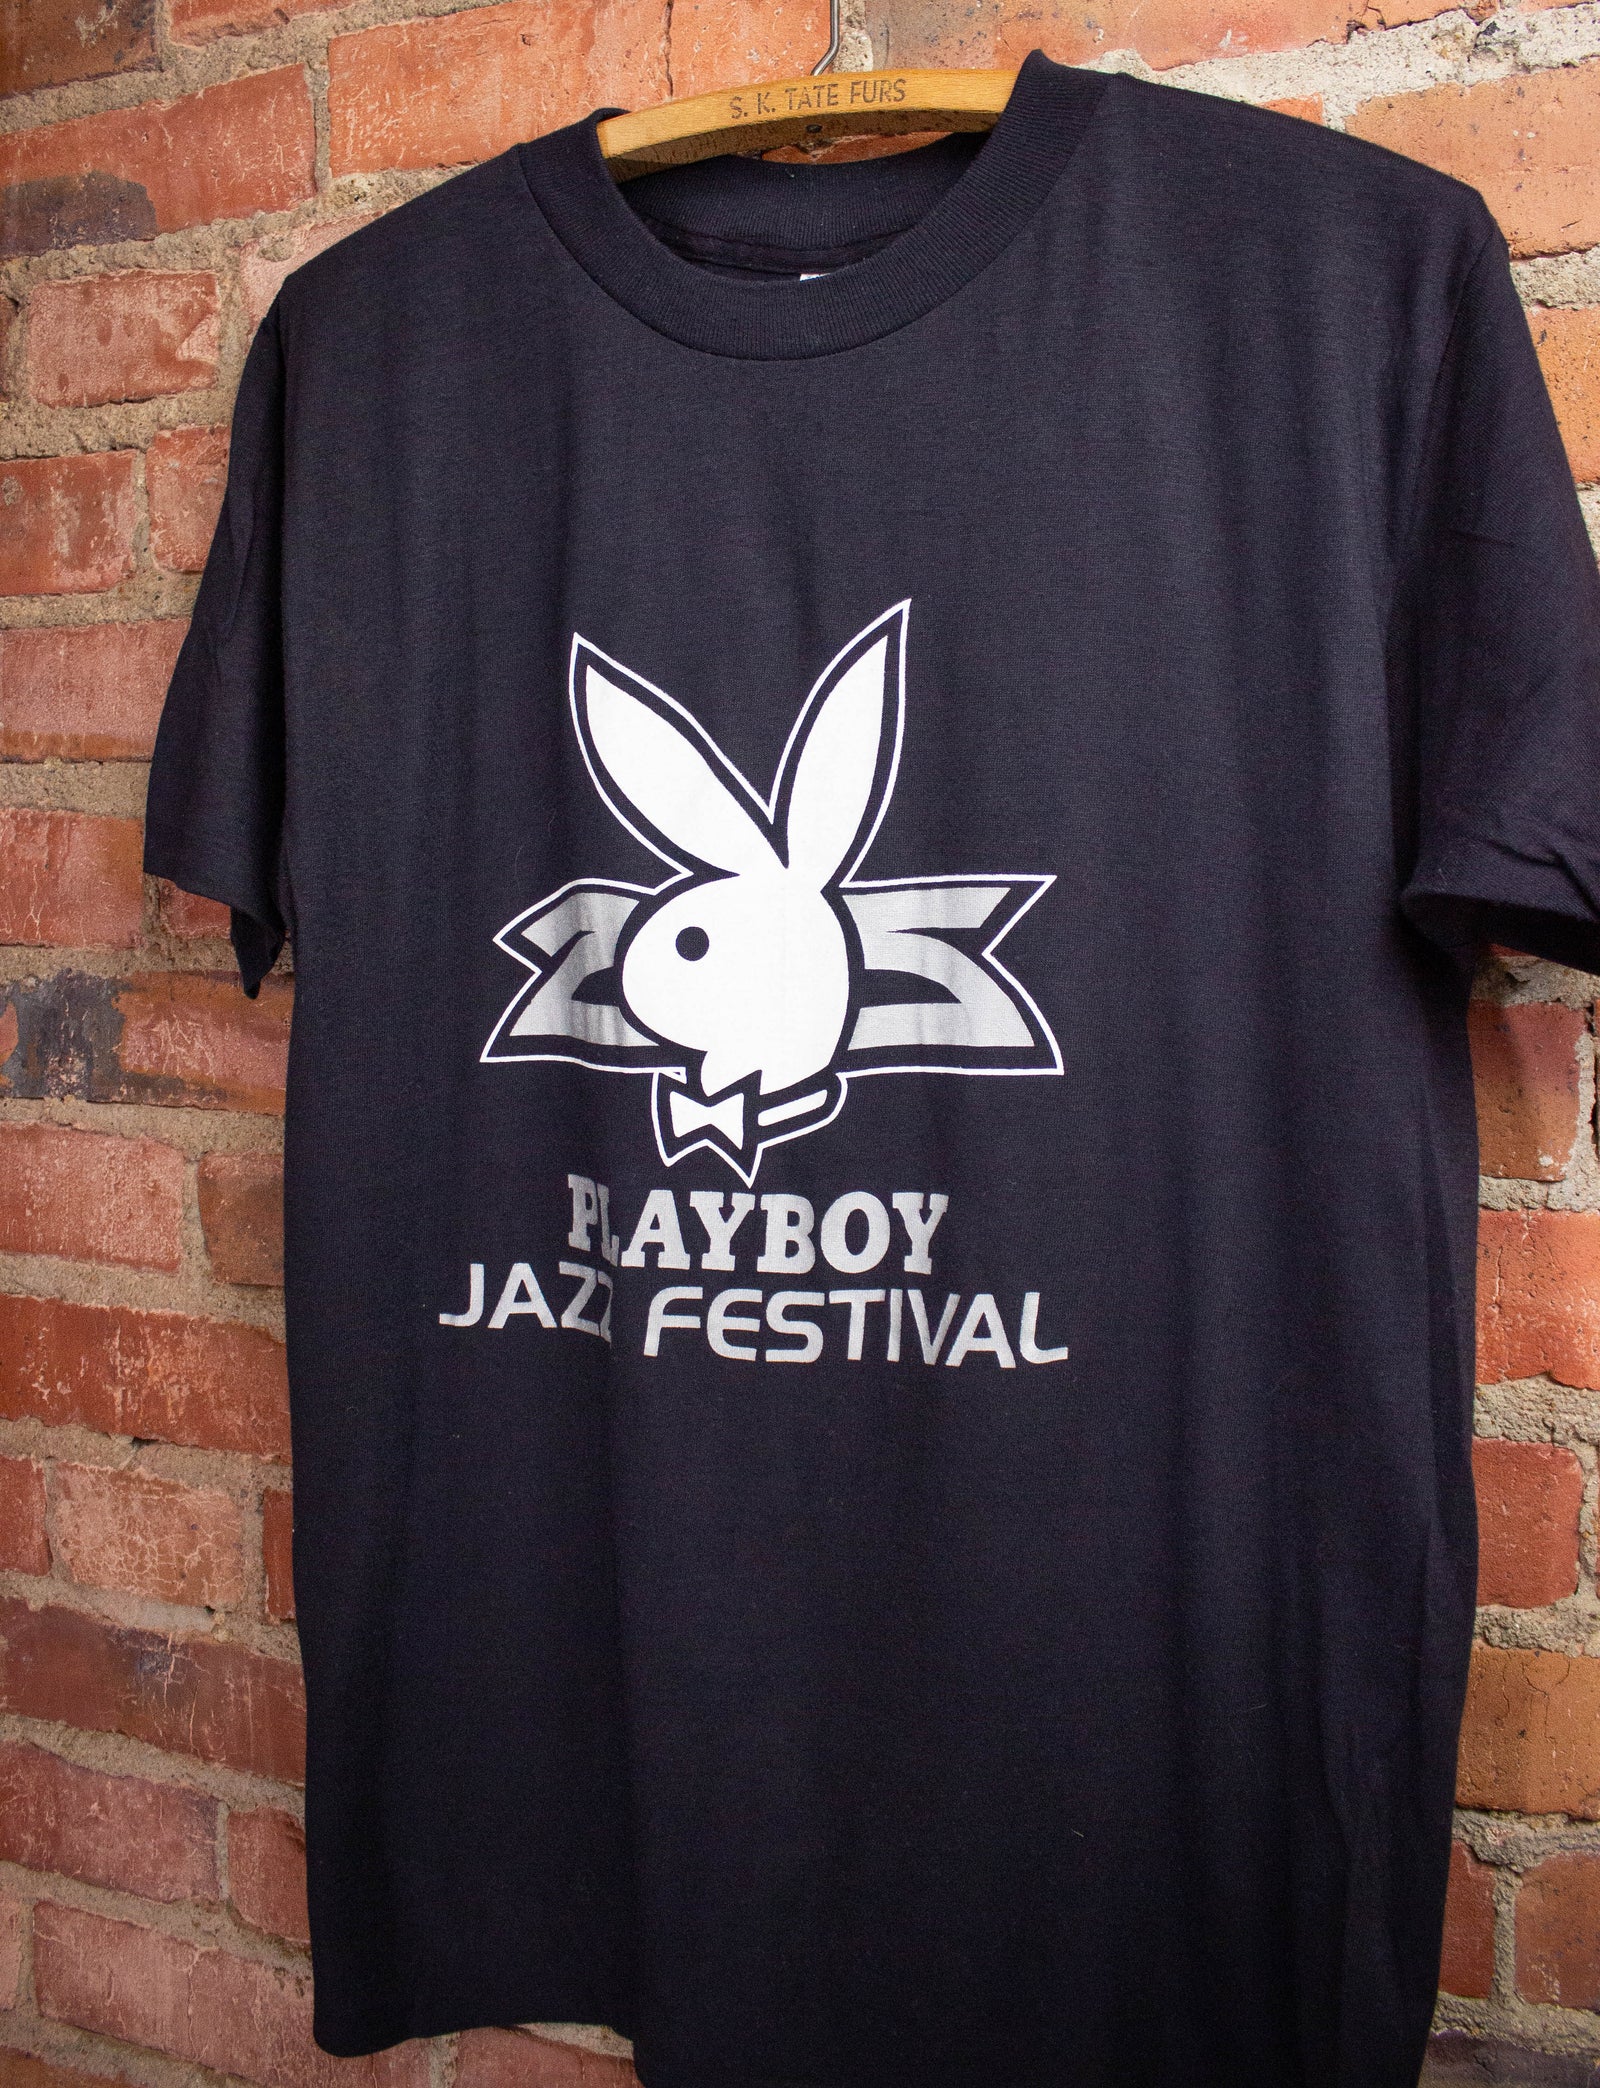 Vintage Playboy 25th Jazz Festival Hollywood Bowl Concert T-Shirt 1979 M